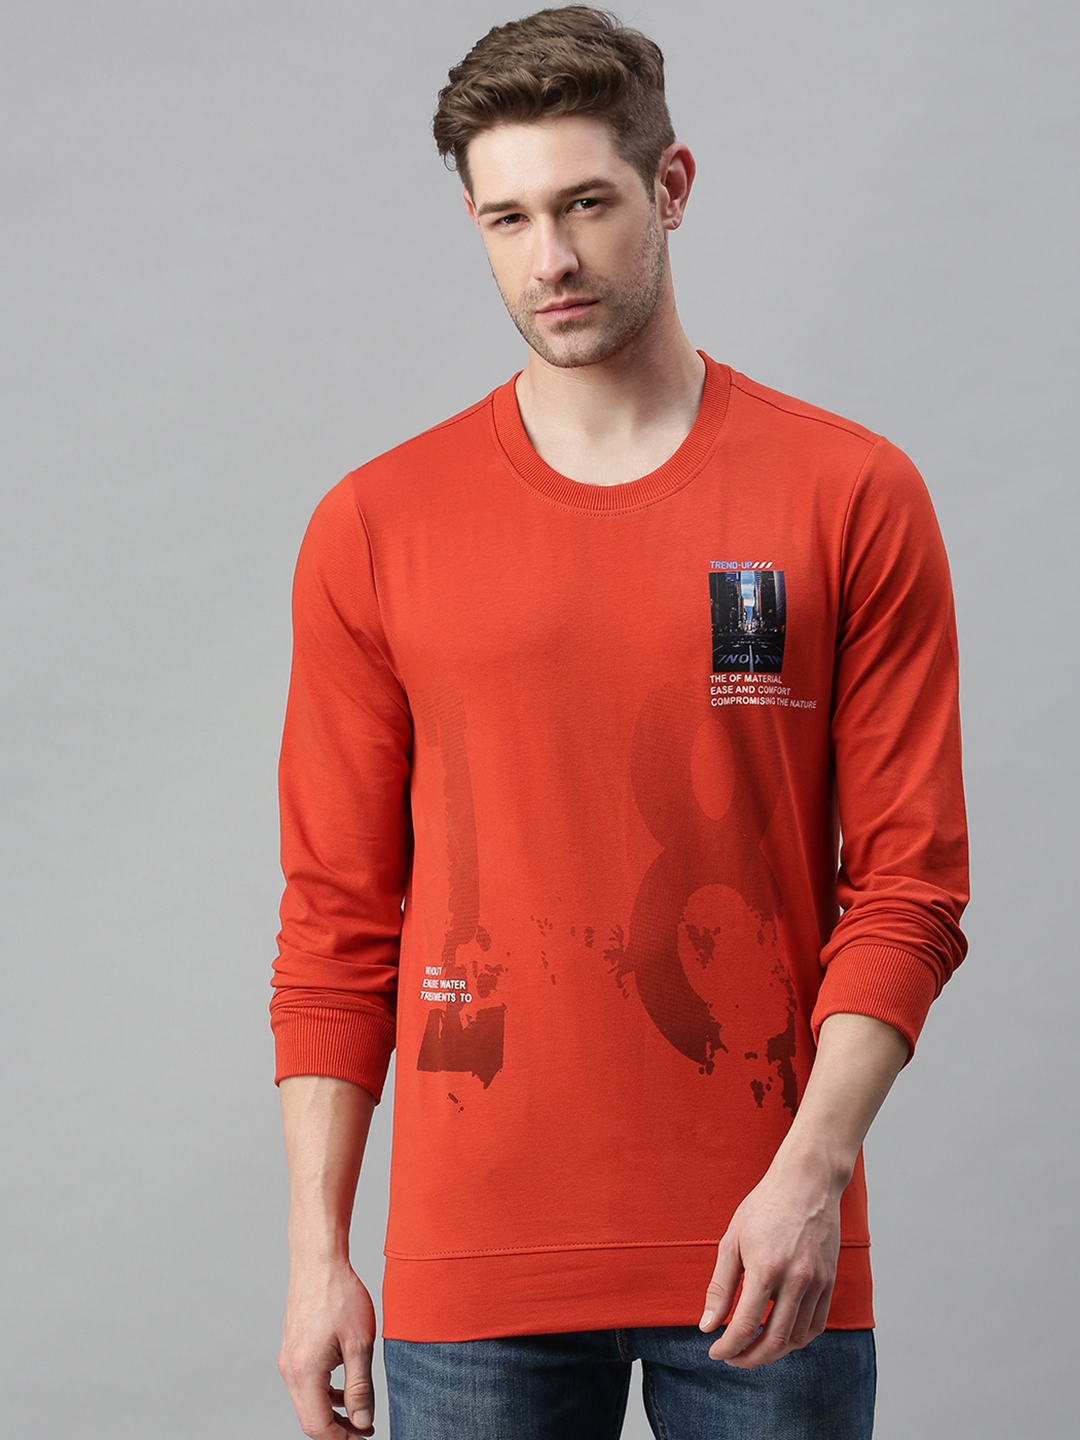 Men's Orange Cotton Blend Printed Sweatshirts